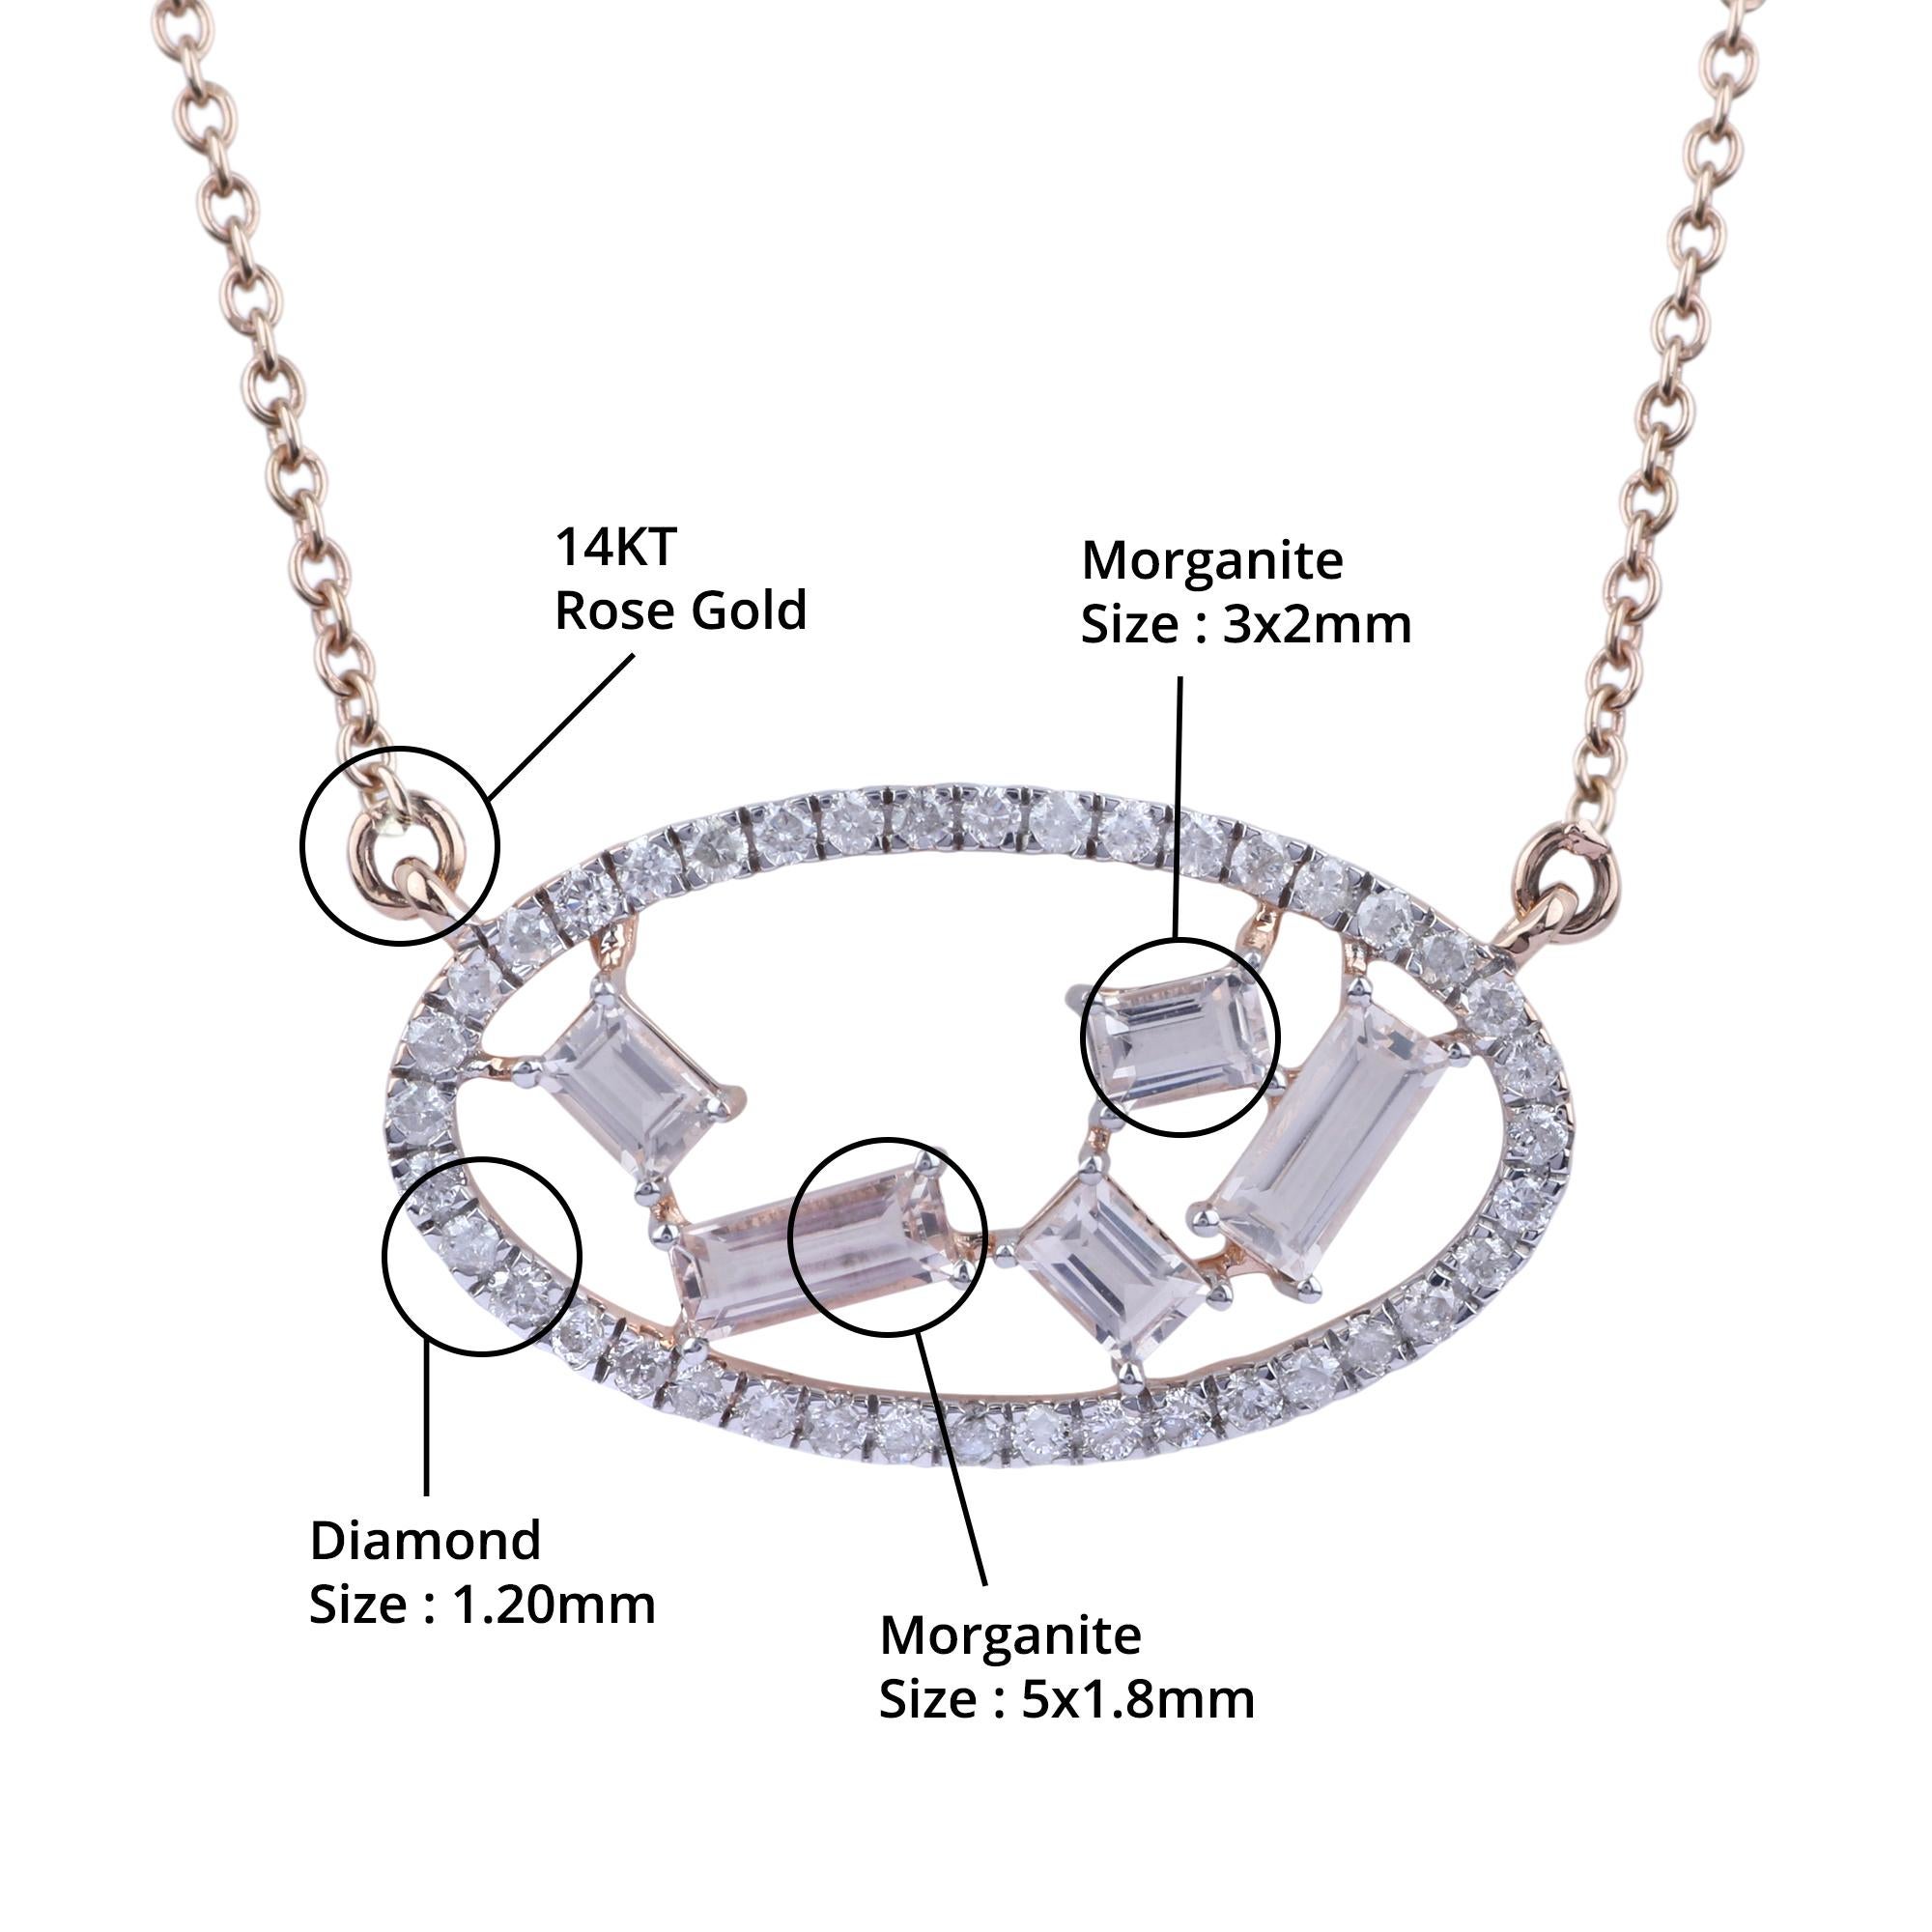 Einzelheiten zum Artikel:-

✦ SKU:- JNC00007RRR

✦ Material :- Gold

✦ Metallreinheit : 14K Rose Gold

✦ Edelstein-Spezifikation:- 
✧ Klarer Diamant rund (l1/H1) - 1,20 mm - 40
✧ Zertifizierter Moissanit (VVS/DE) - 3x2 mm - 3
✧ Zertifizierter